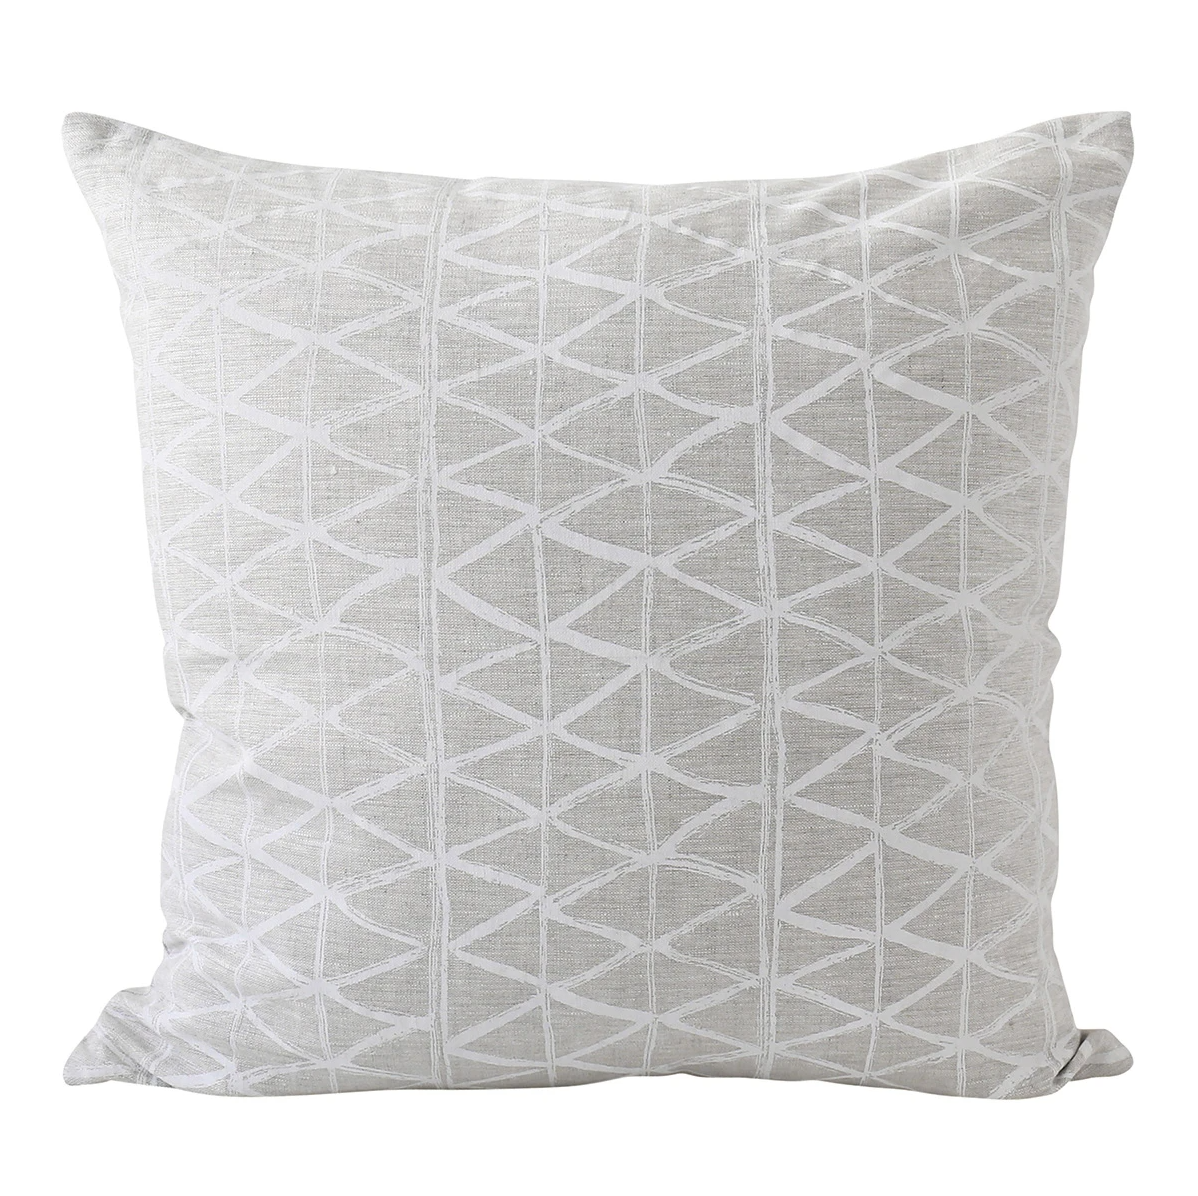 Zulu Chalk Linen Cushion, 20" x 20"